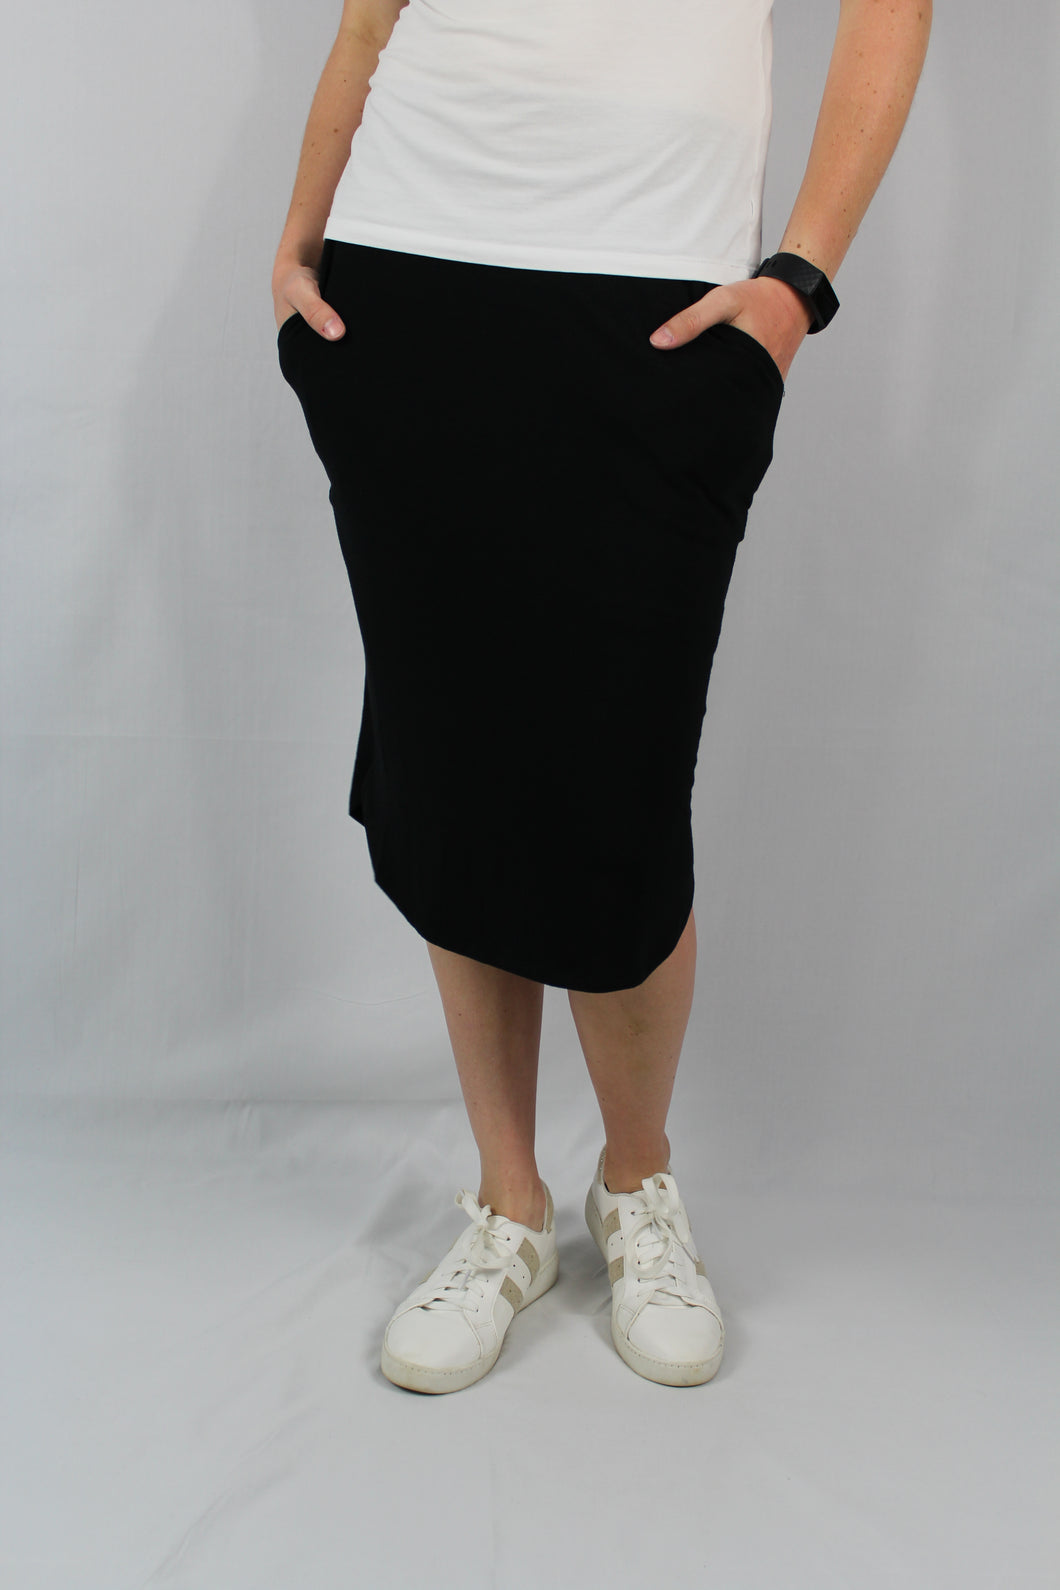 Elastic Waist Skirt with Pockets-Black- 2X,3X